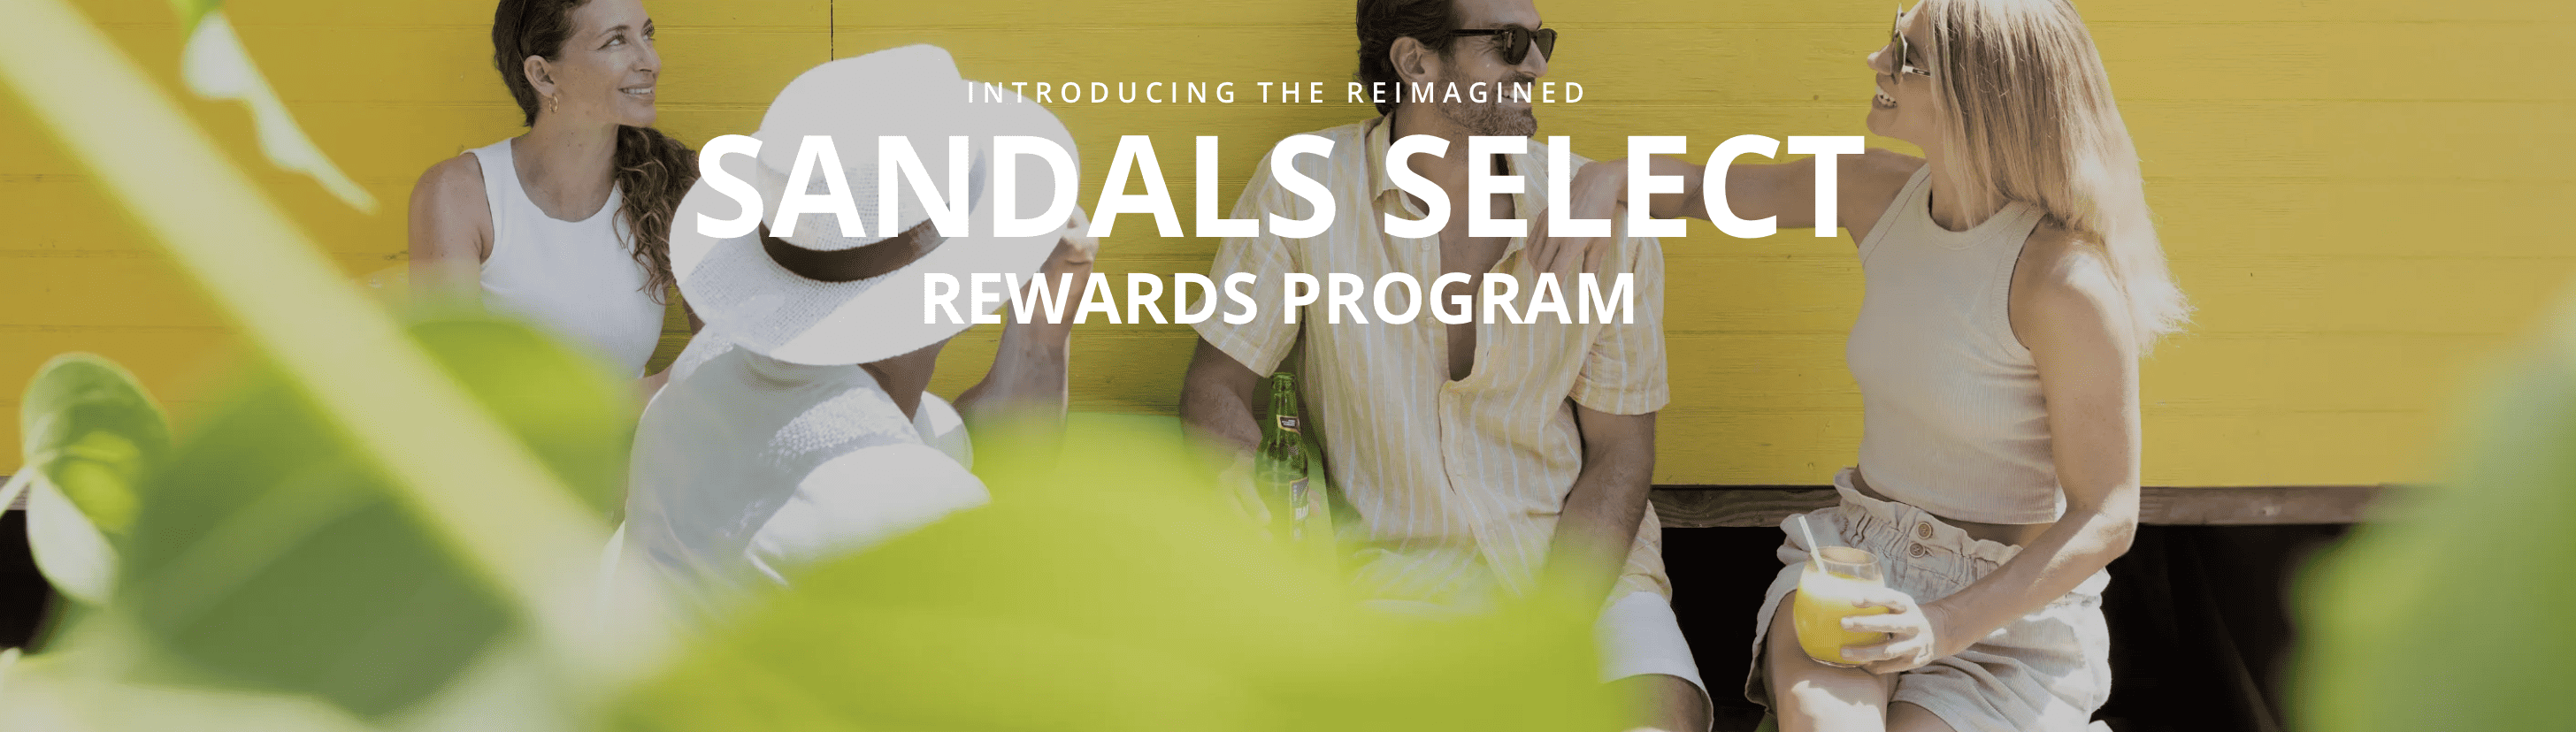 Sandals Select Rewards